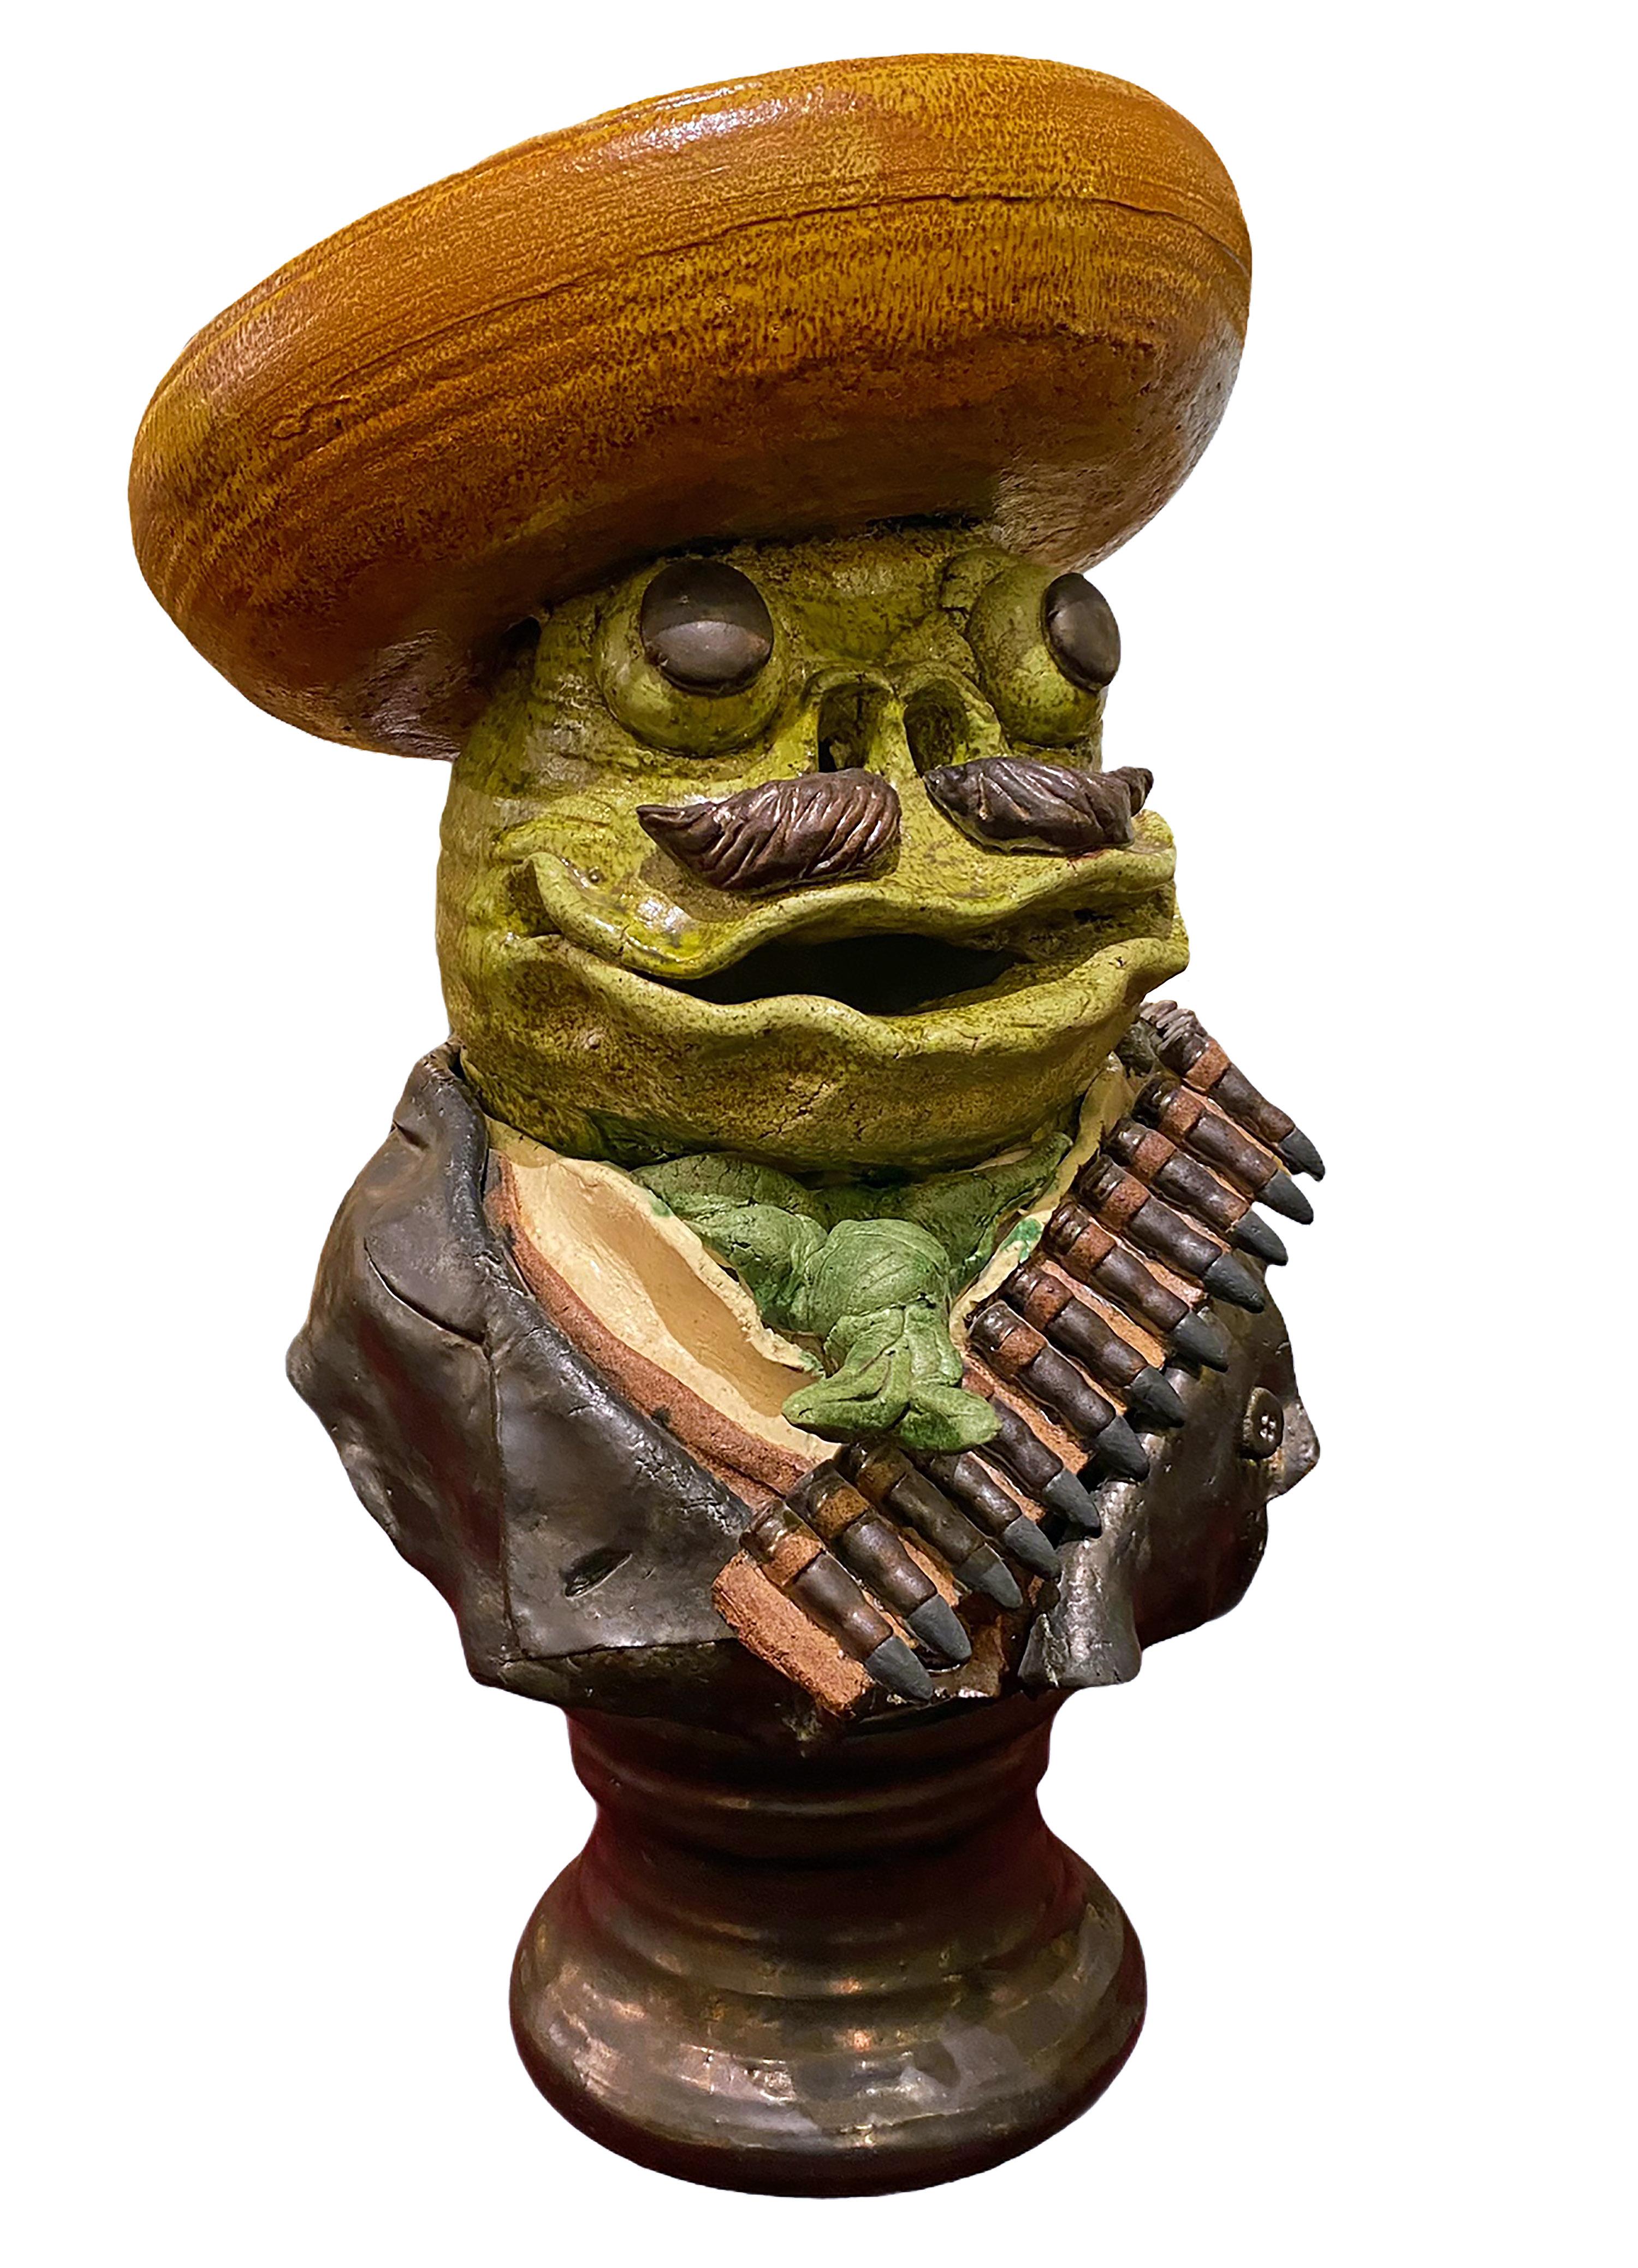 David Gilhooly Figurative Sculpture - Emiliano Zapata / Frog Revolutionary